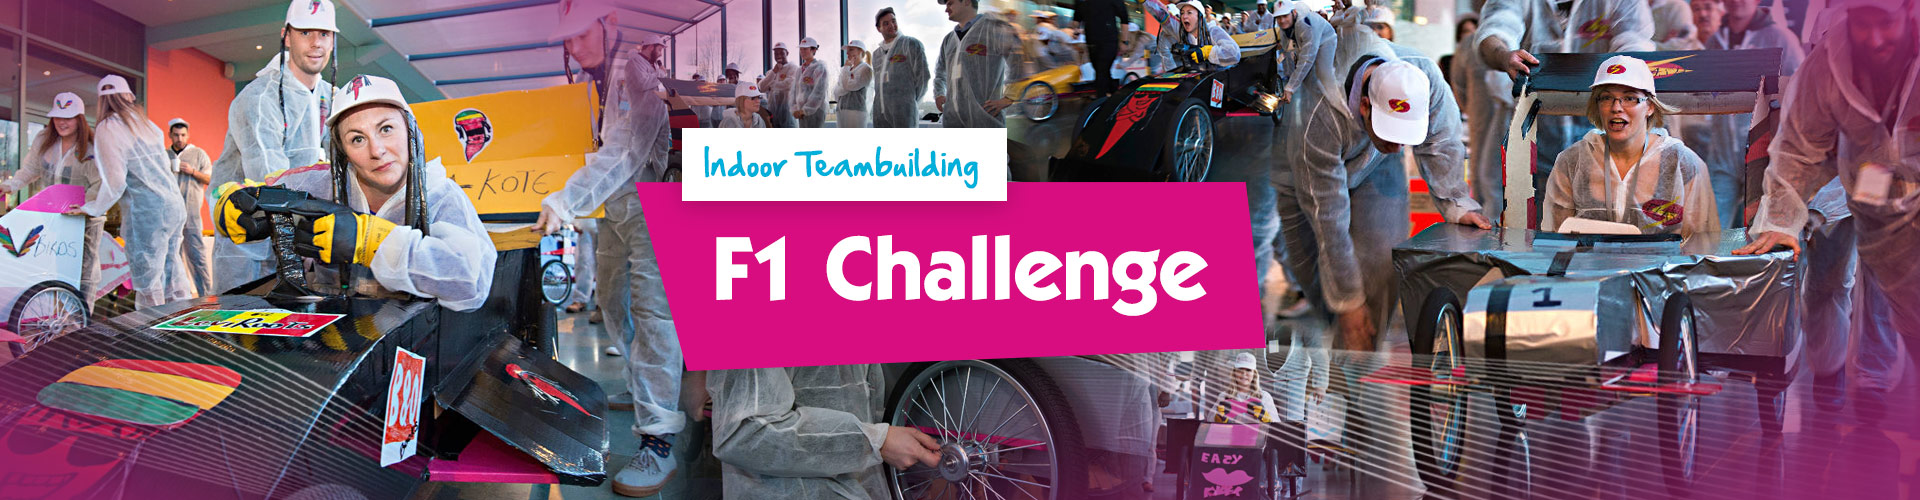 Teambuilding | F1 Challenge